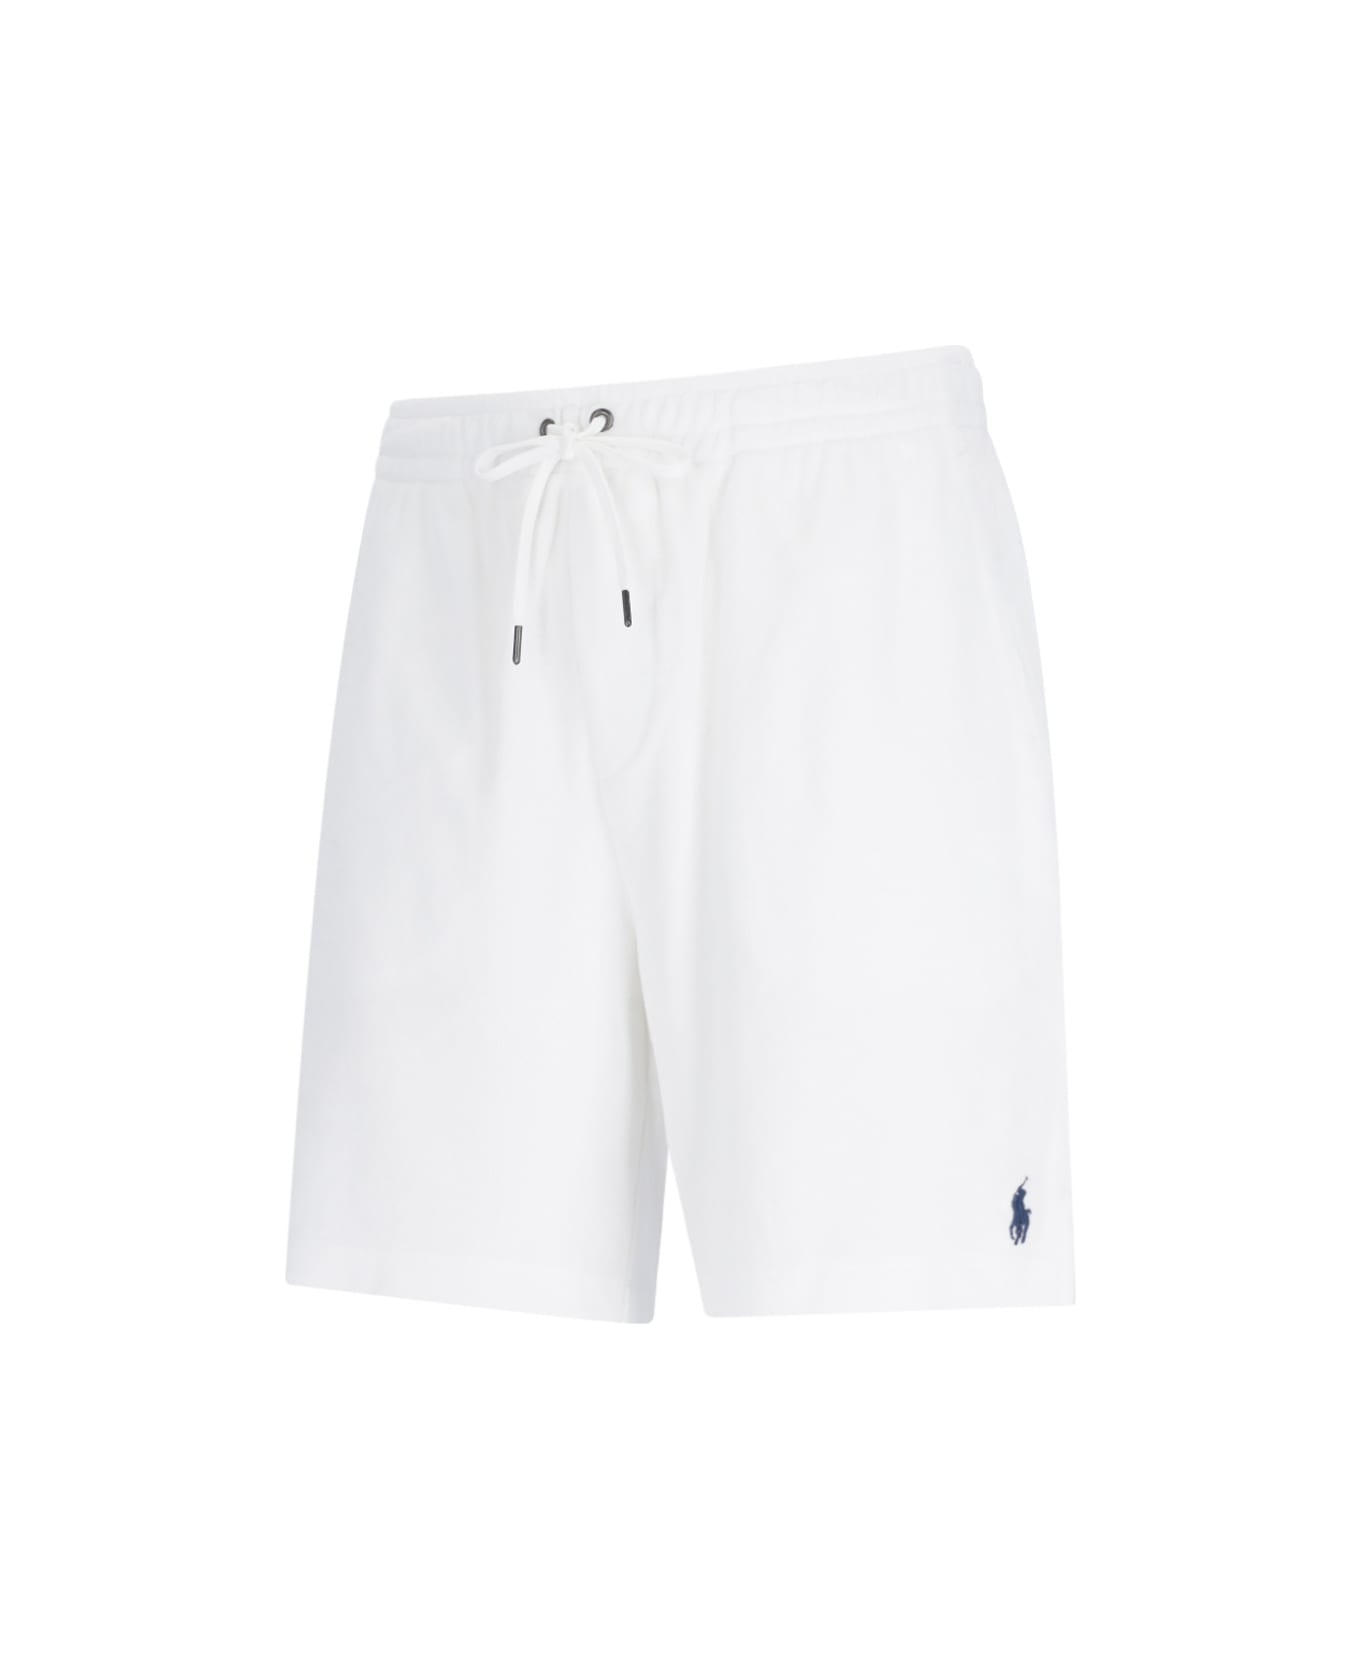 Polo Ralph Lauren Terry Shorts - White ボトムス